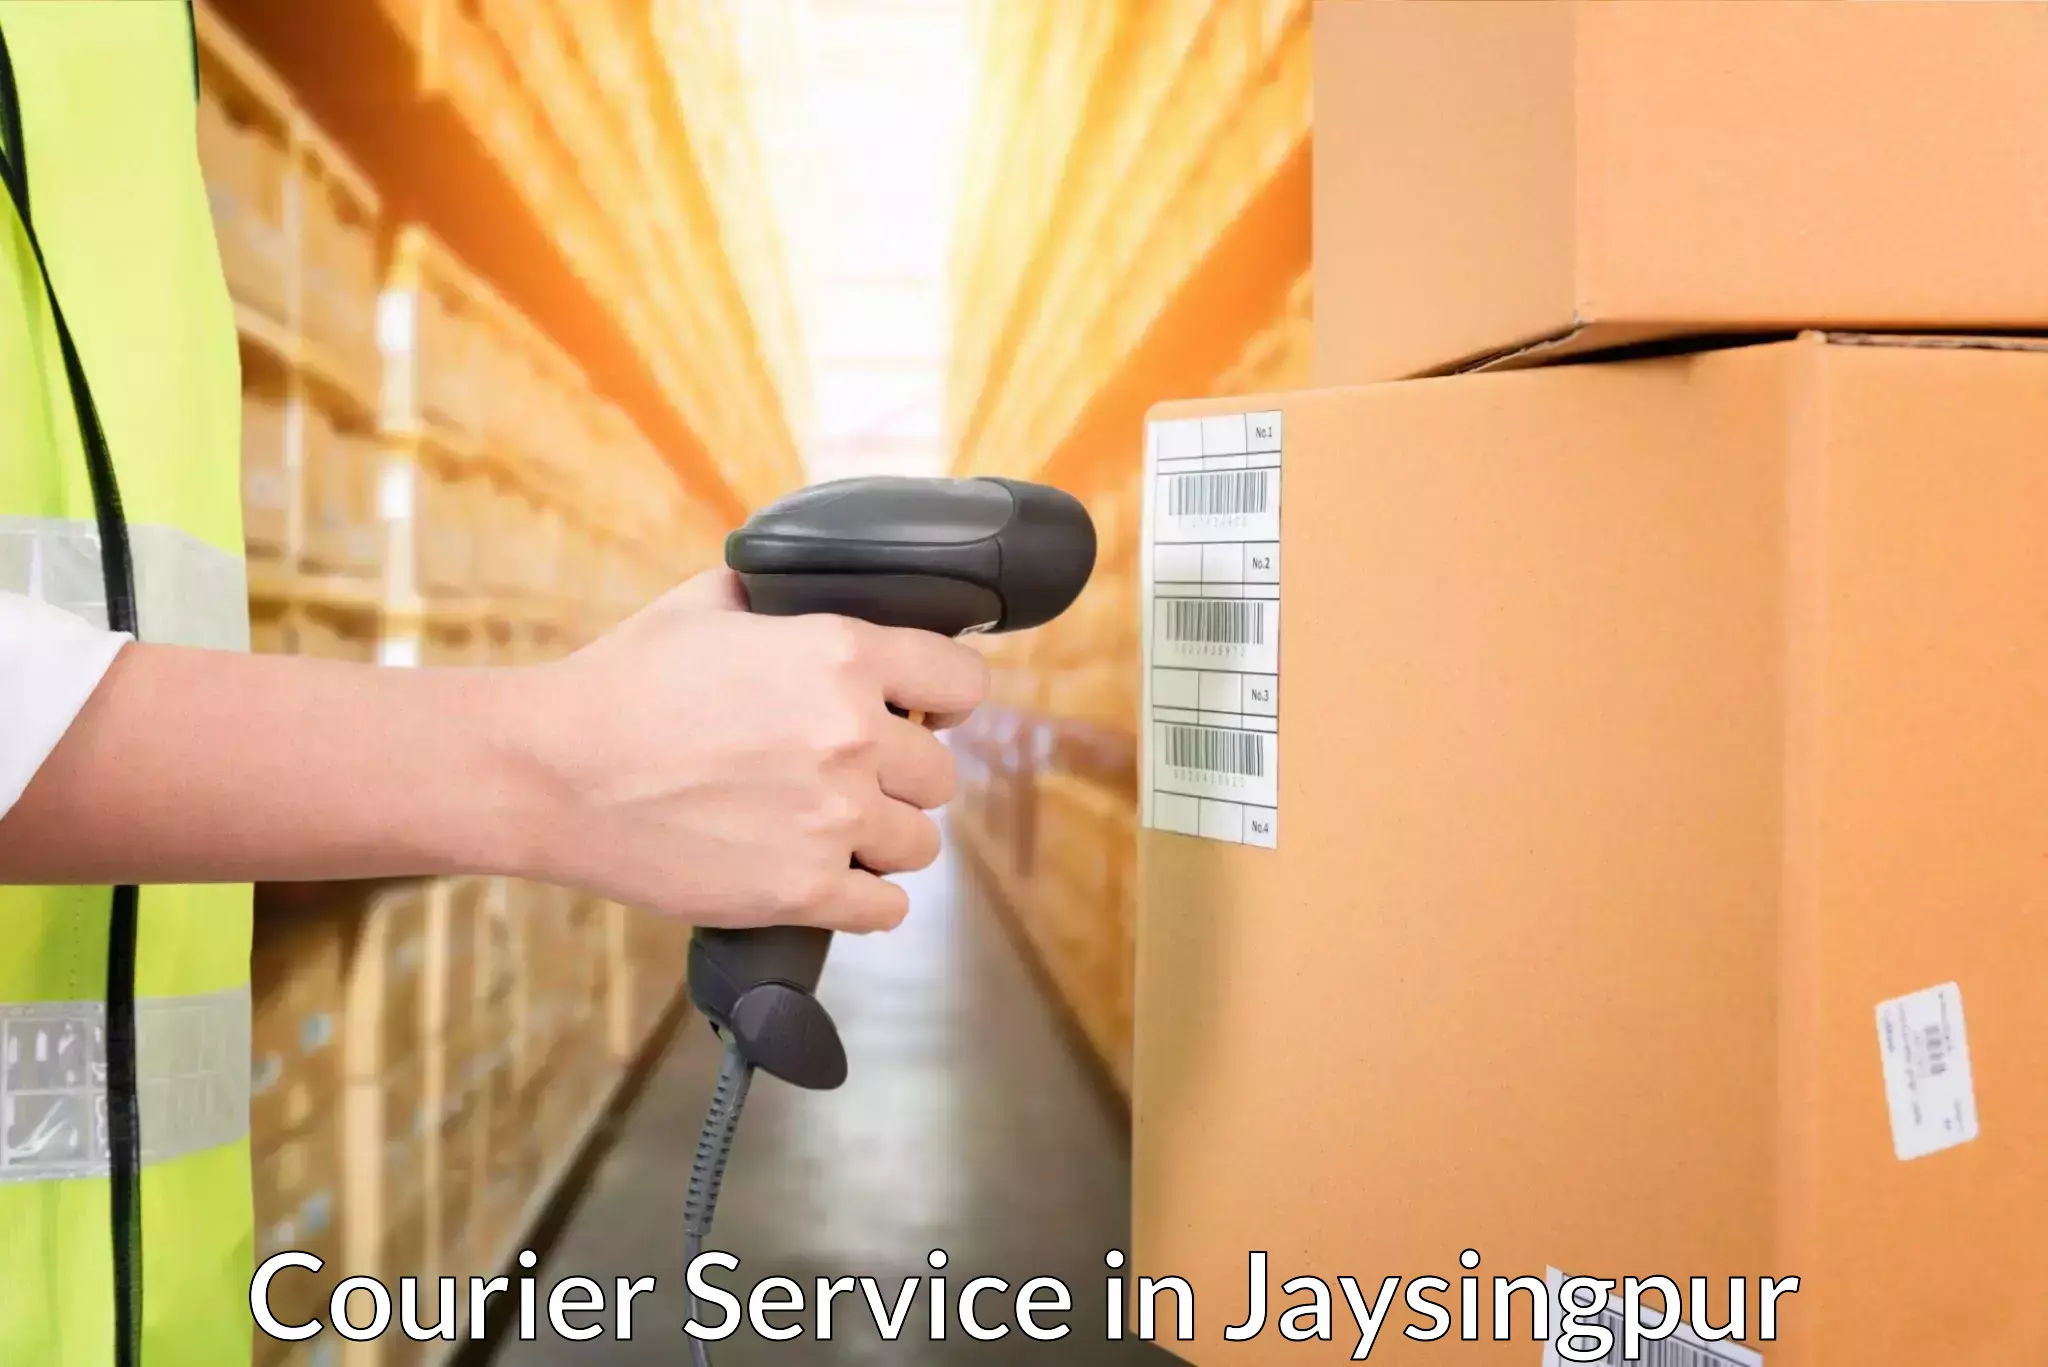 Customer-focused courier in Jaysingpur